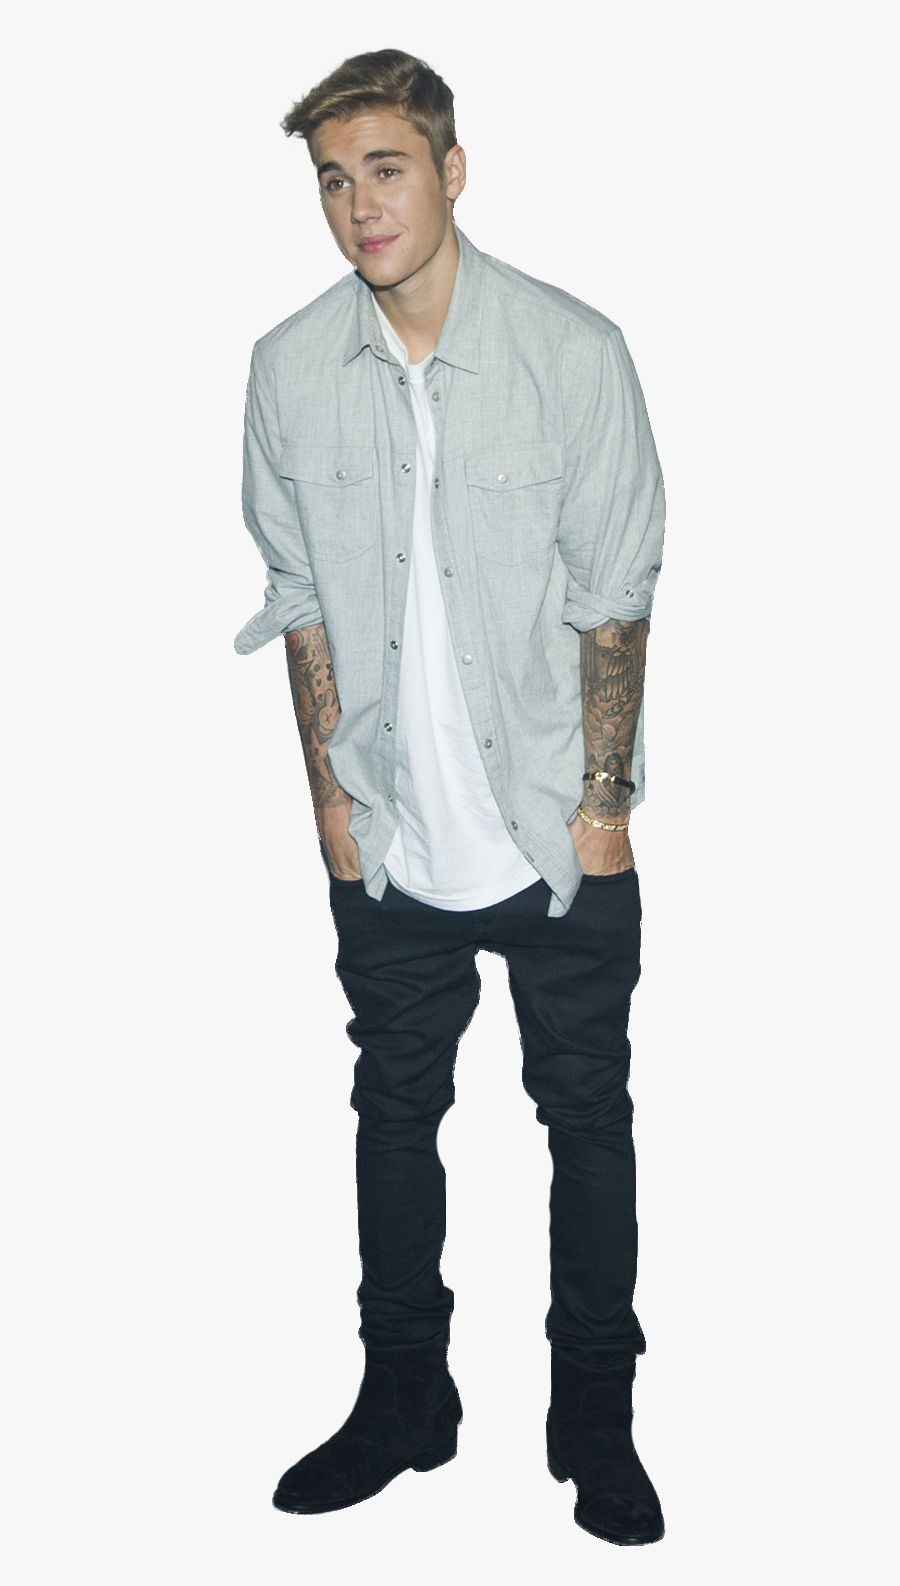 Justin Bieber Standing Png Image - Justin Bieber Standing Transparent, Transparent Clipart